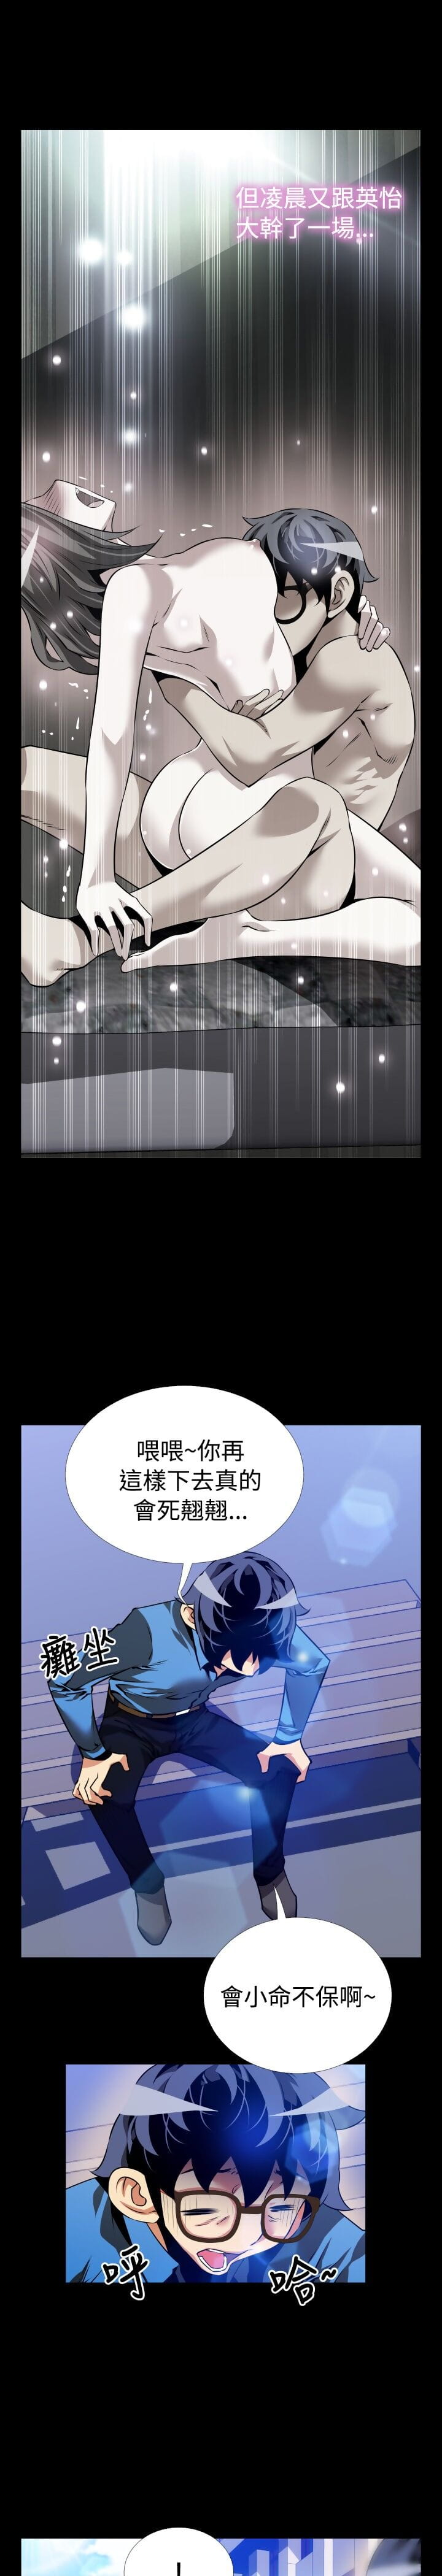 KKUN &INSANE Love Parameter 恋爱辅助器 83-85 Chinese - part 4